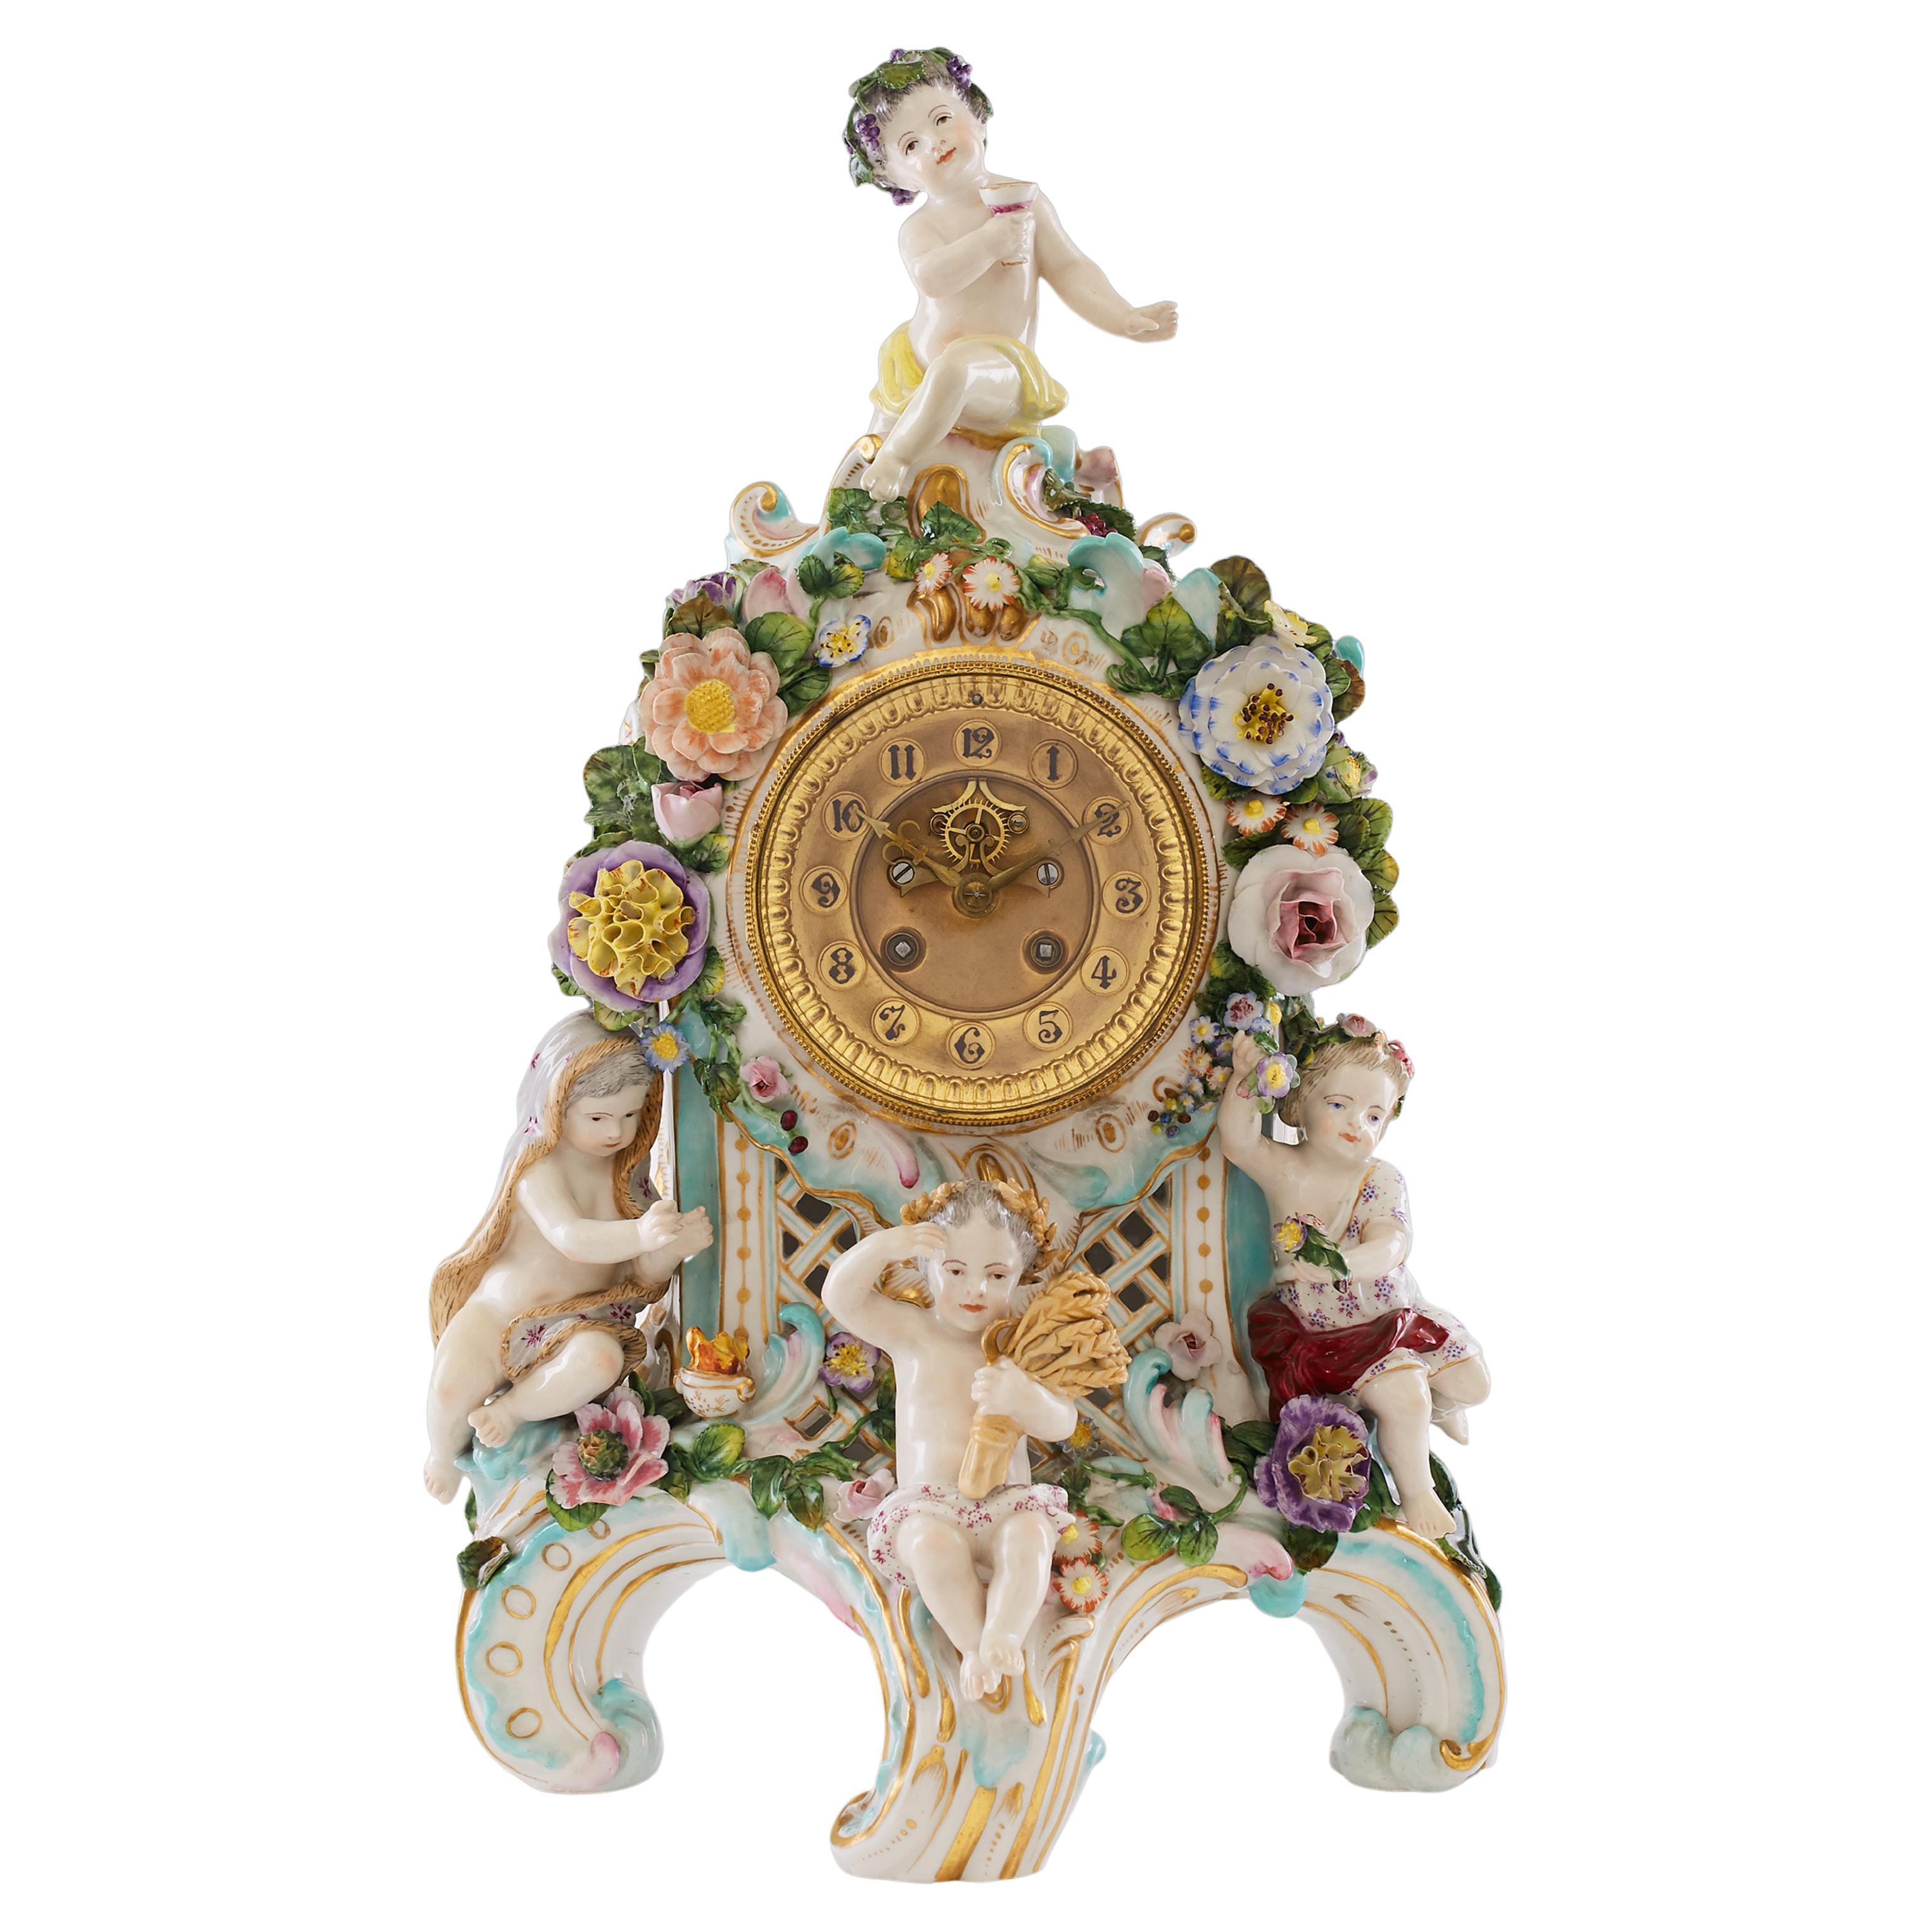 Mantel Clock 19th Century Porcelain Styl Rococo